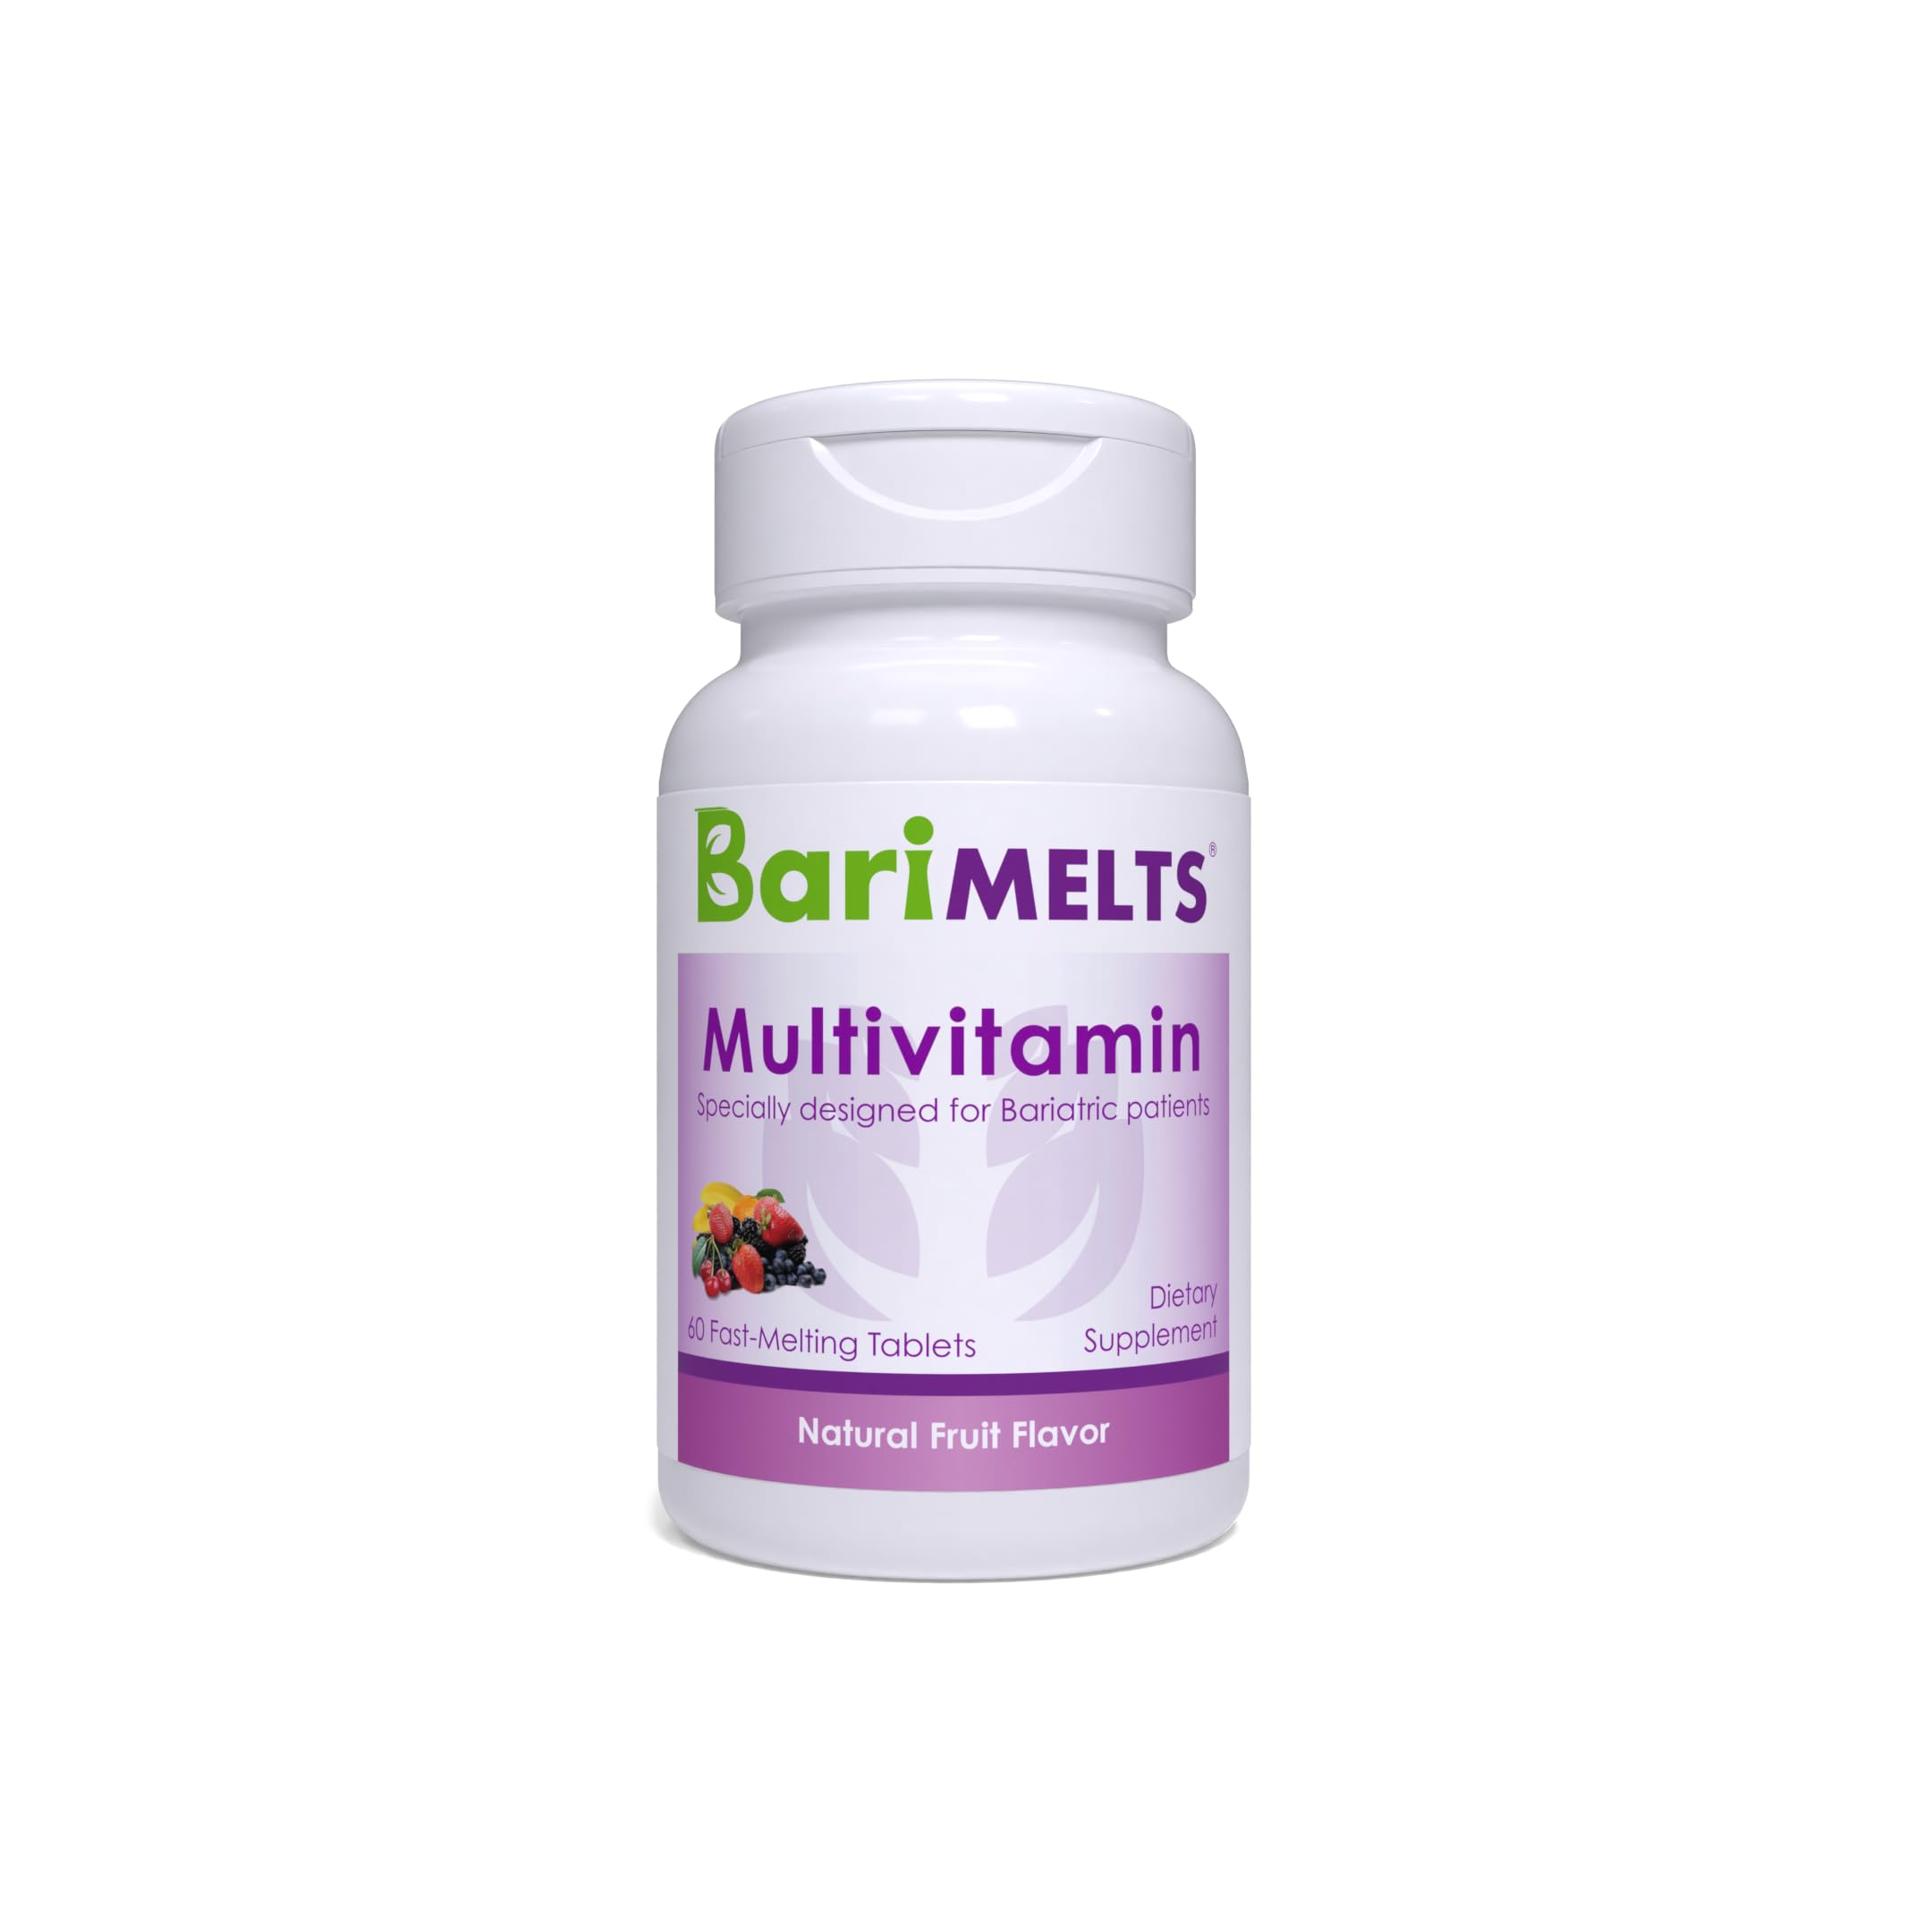 Book Cover BariMelts Multivitamin, Dissolvable Bariatric Vitamins, Natural Fruit Flavor, 60 Fast Melting Tablets